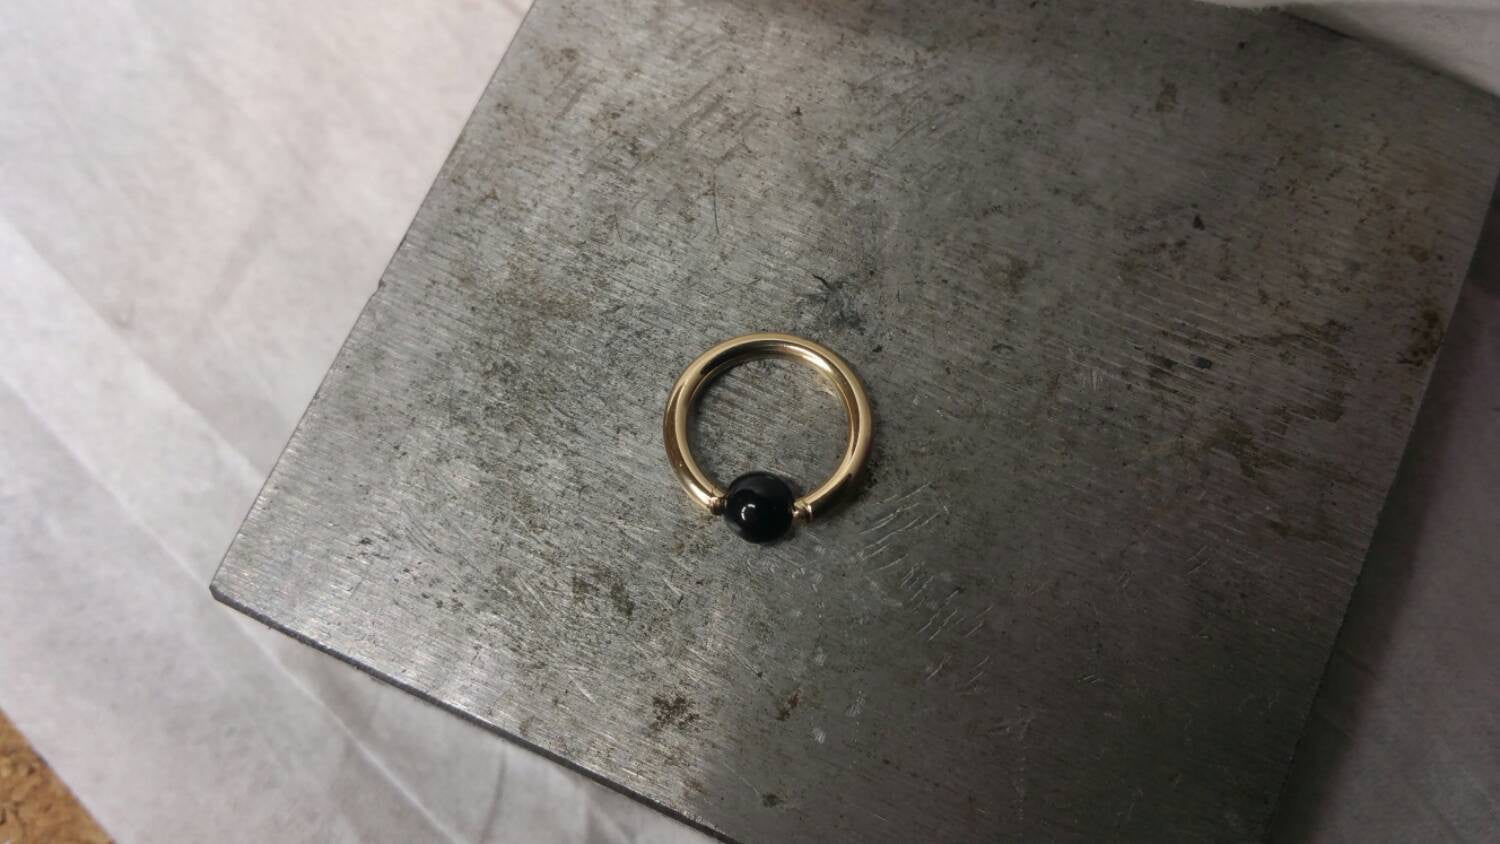 4mm Obsidian Captive Bead Ring - 16 ga Hoop - 14k Gold (Y, W, or R), Sterling Silver, or Platinum